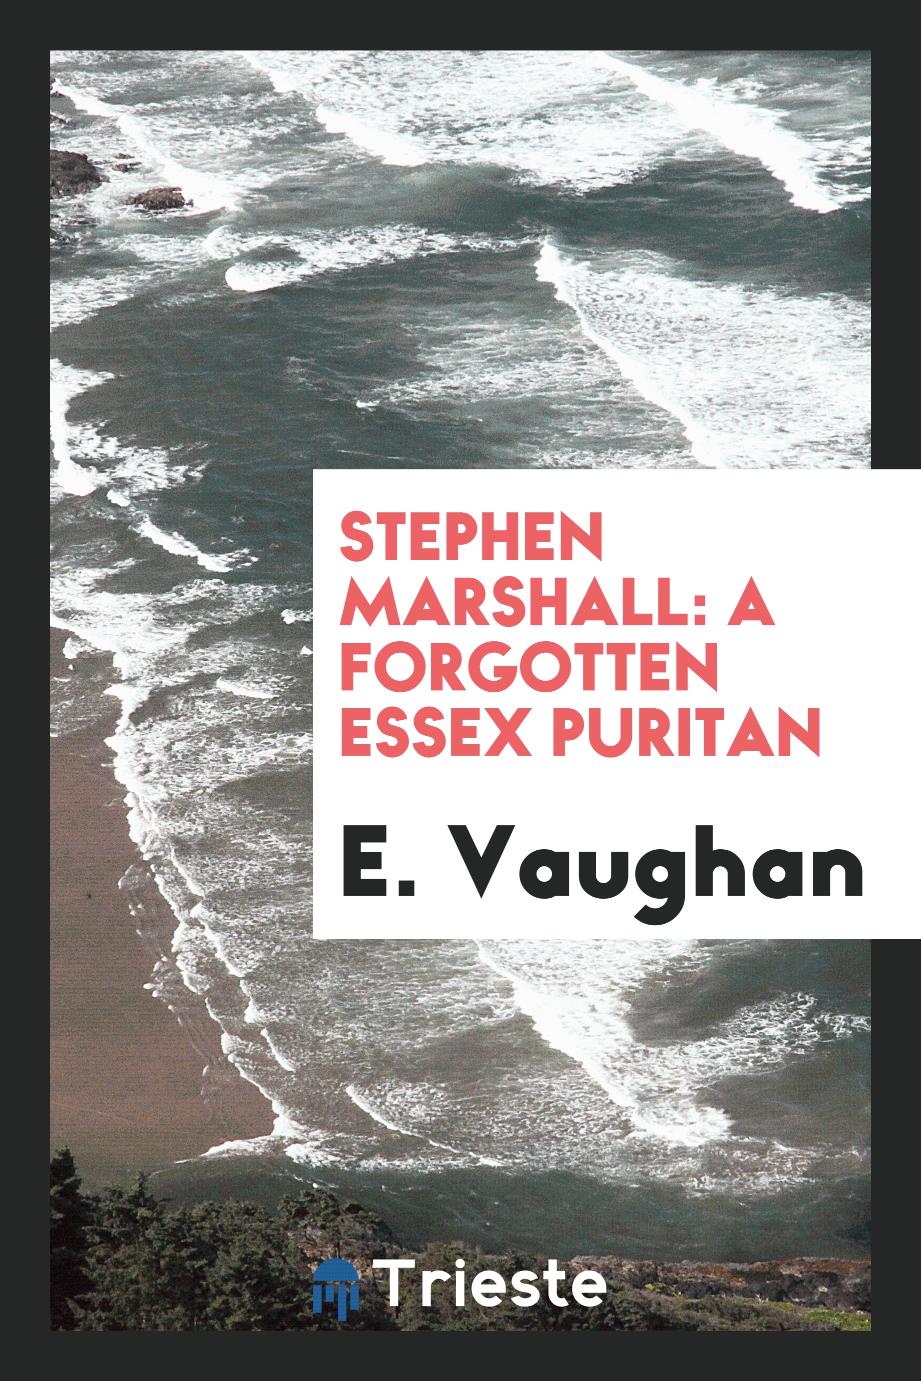 Stephen Marshall: a forgotten Essex Puritan